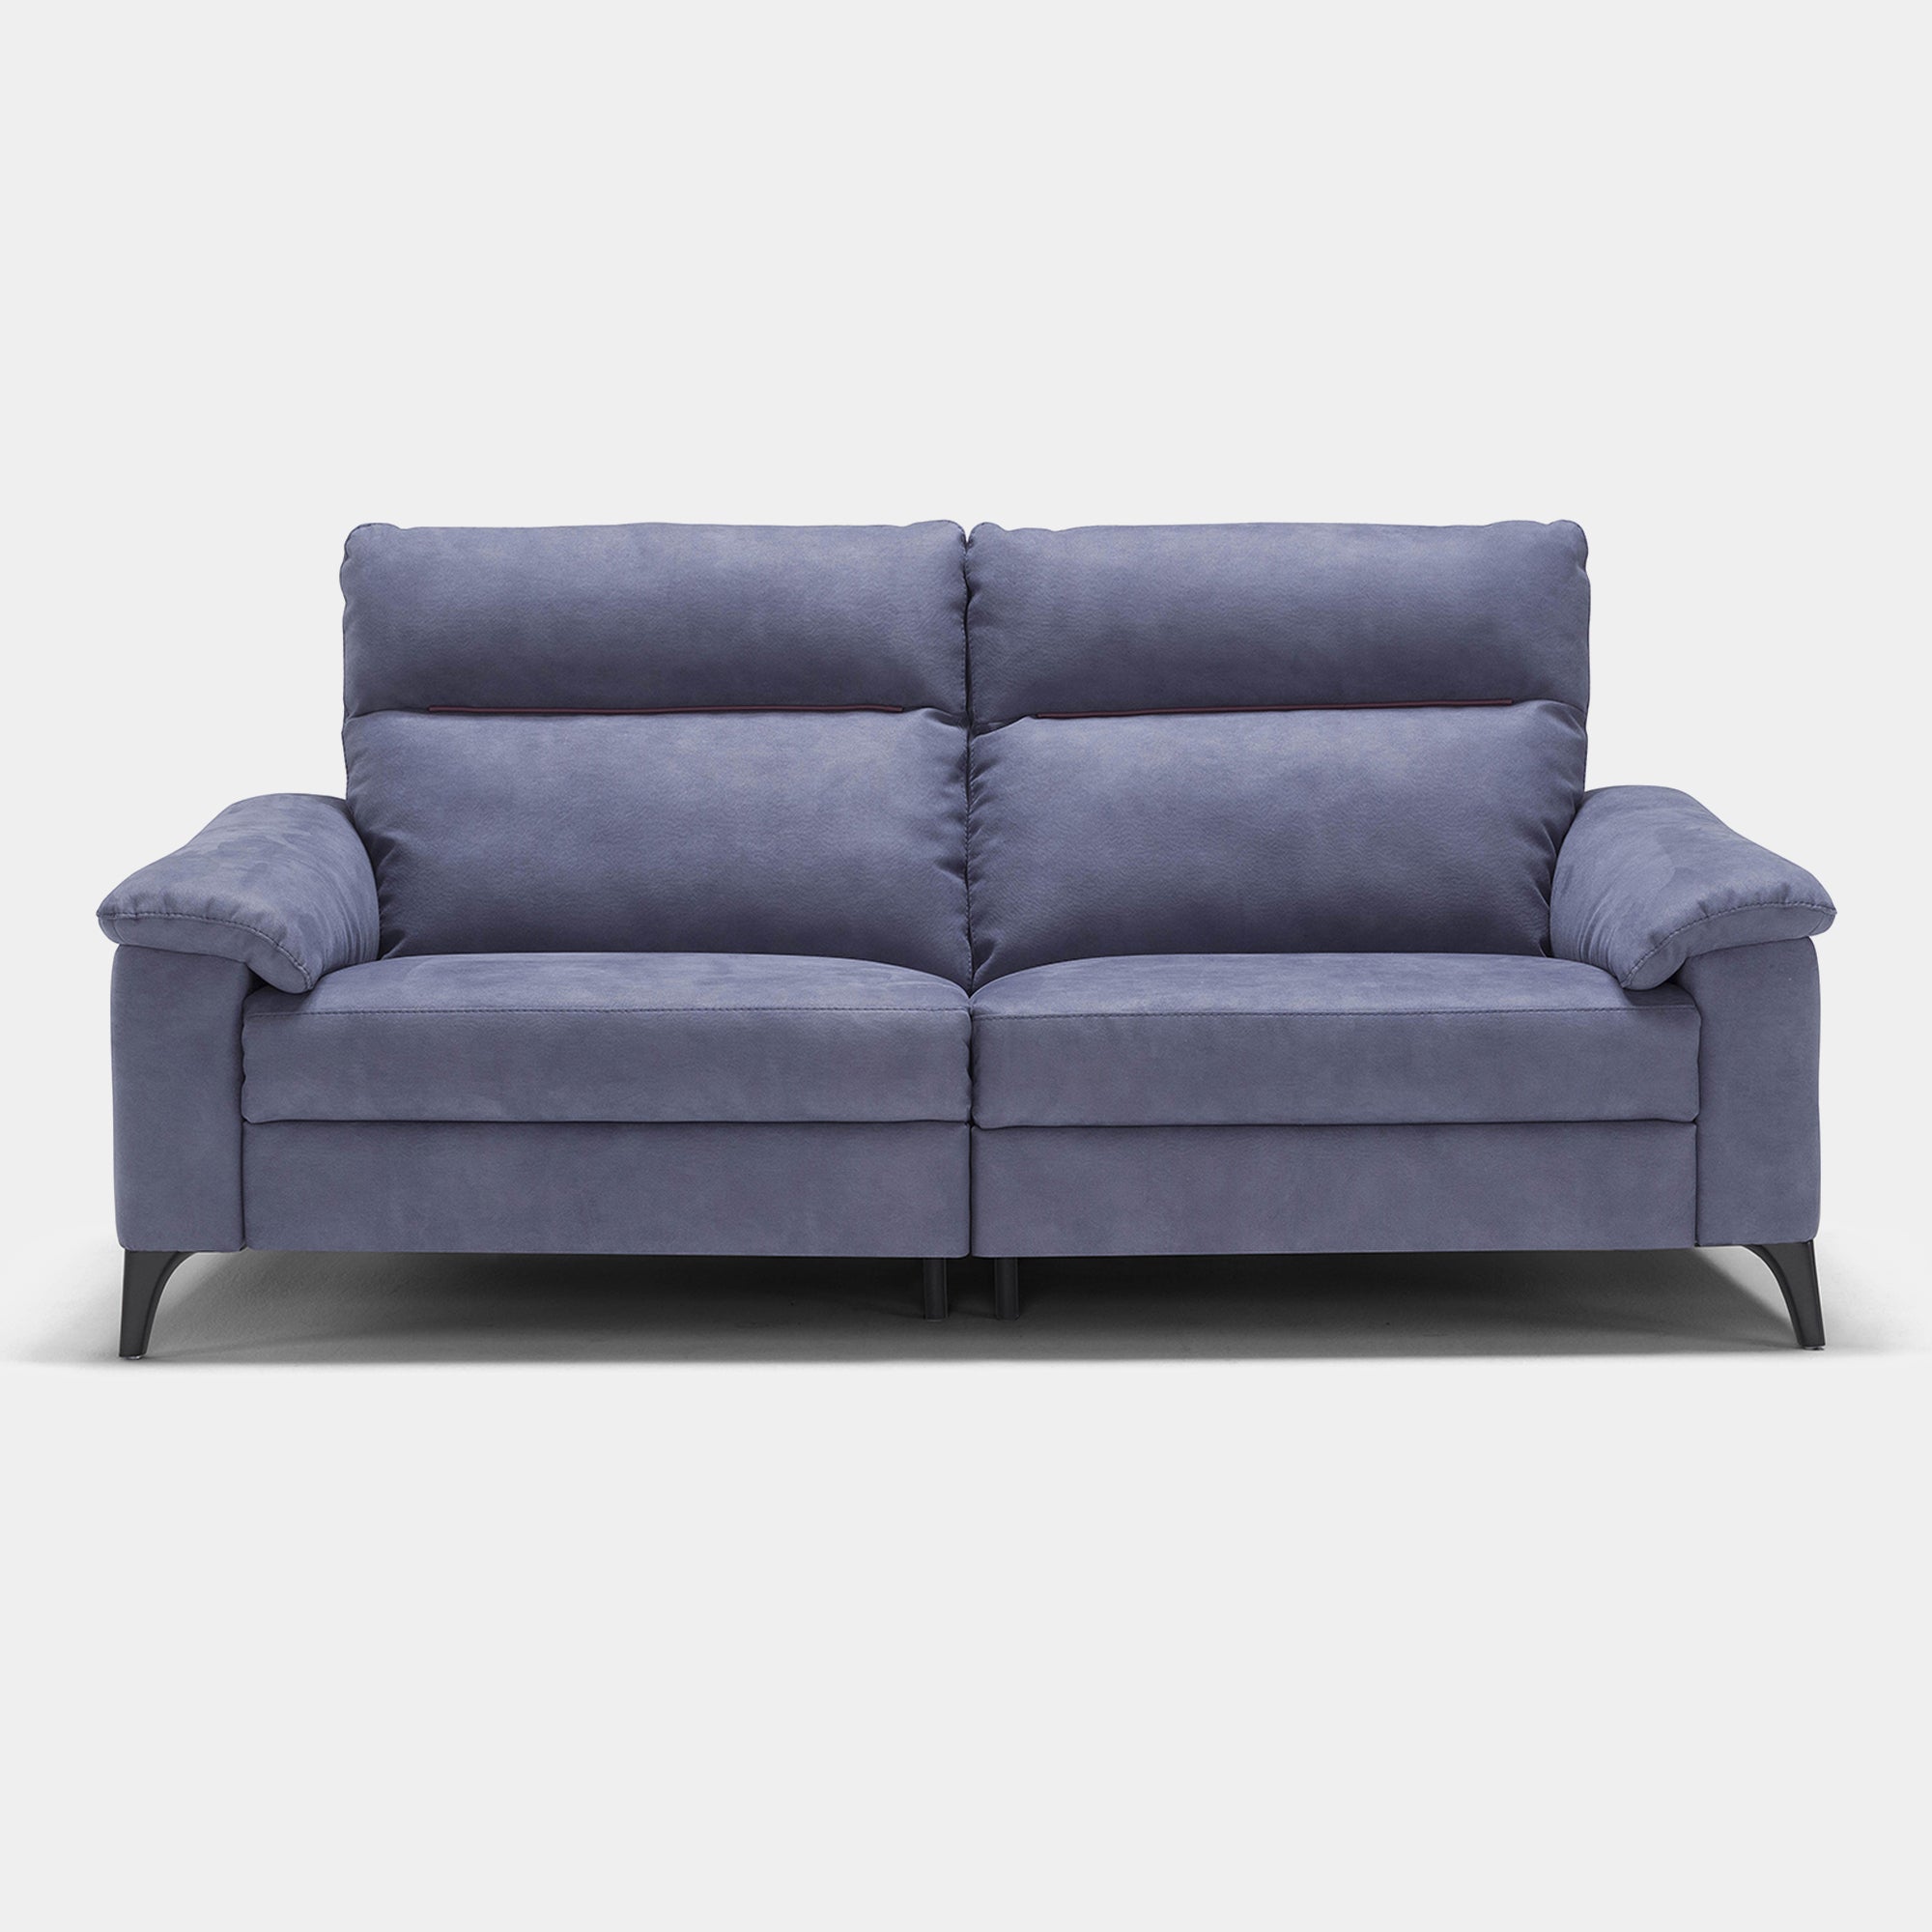 Treviso - 2 Seat Maxi Sofa In Fabric Or Leather Microfibre